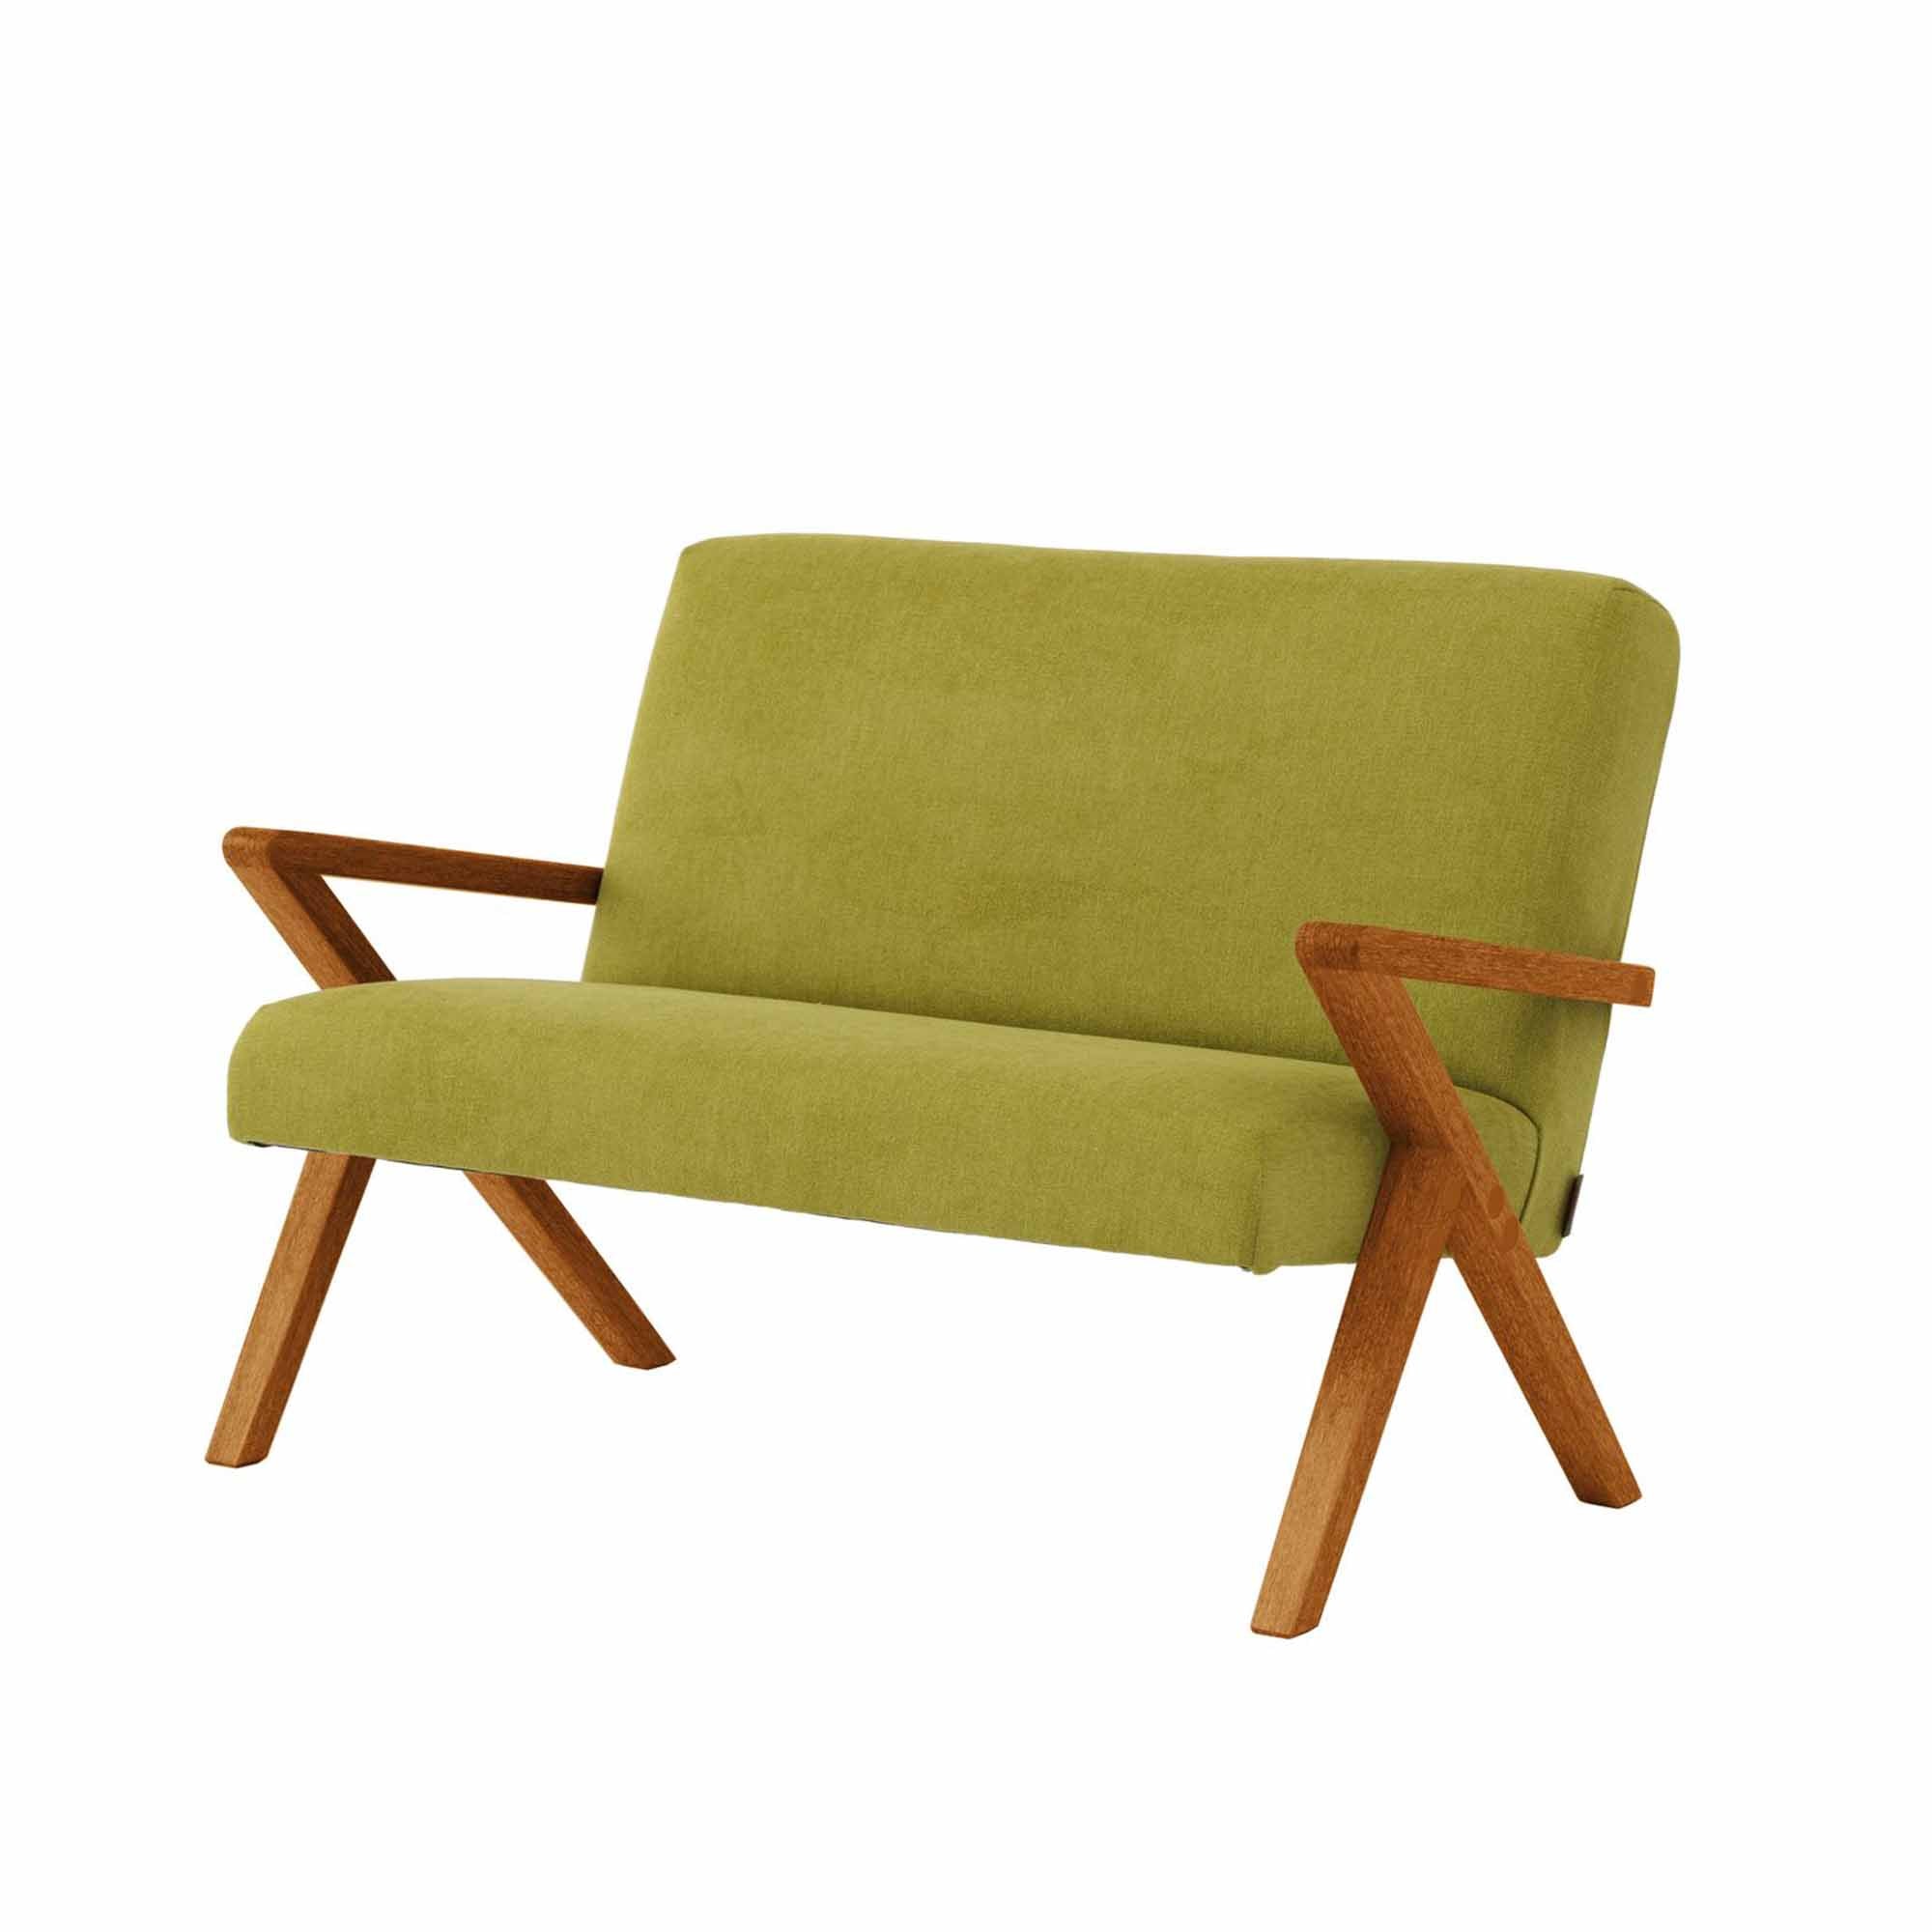  2-Seater Sofa, Beech Wood Frame, Oak Colour green fabric, half-side view